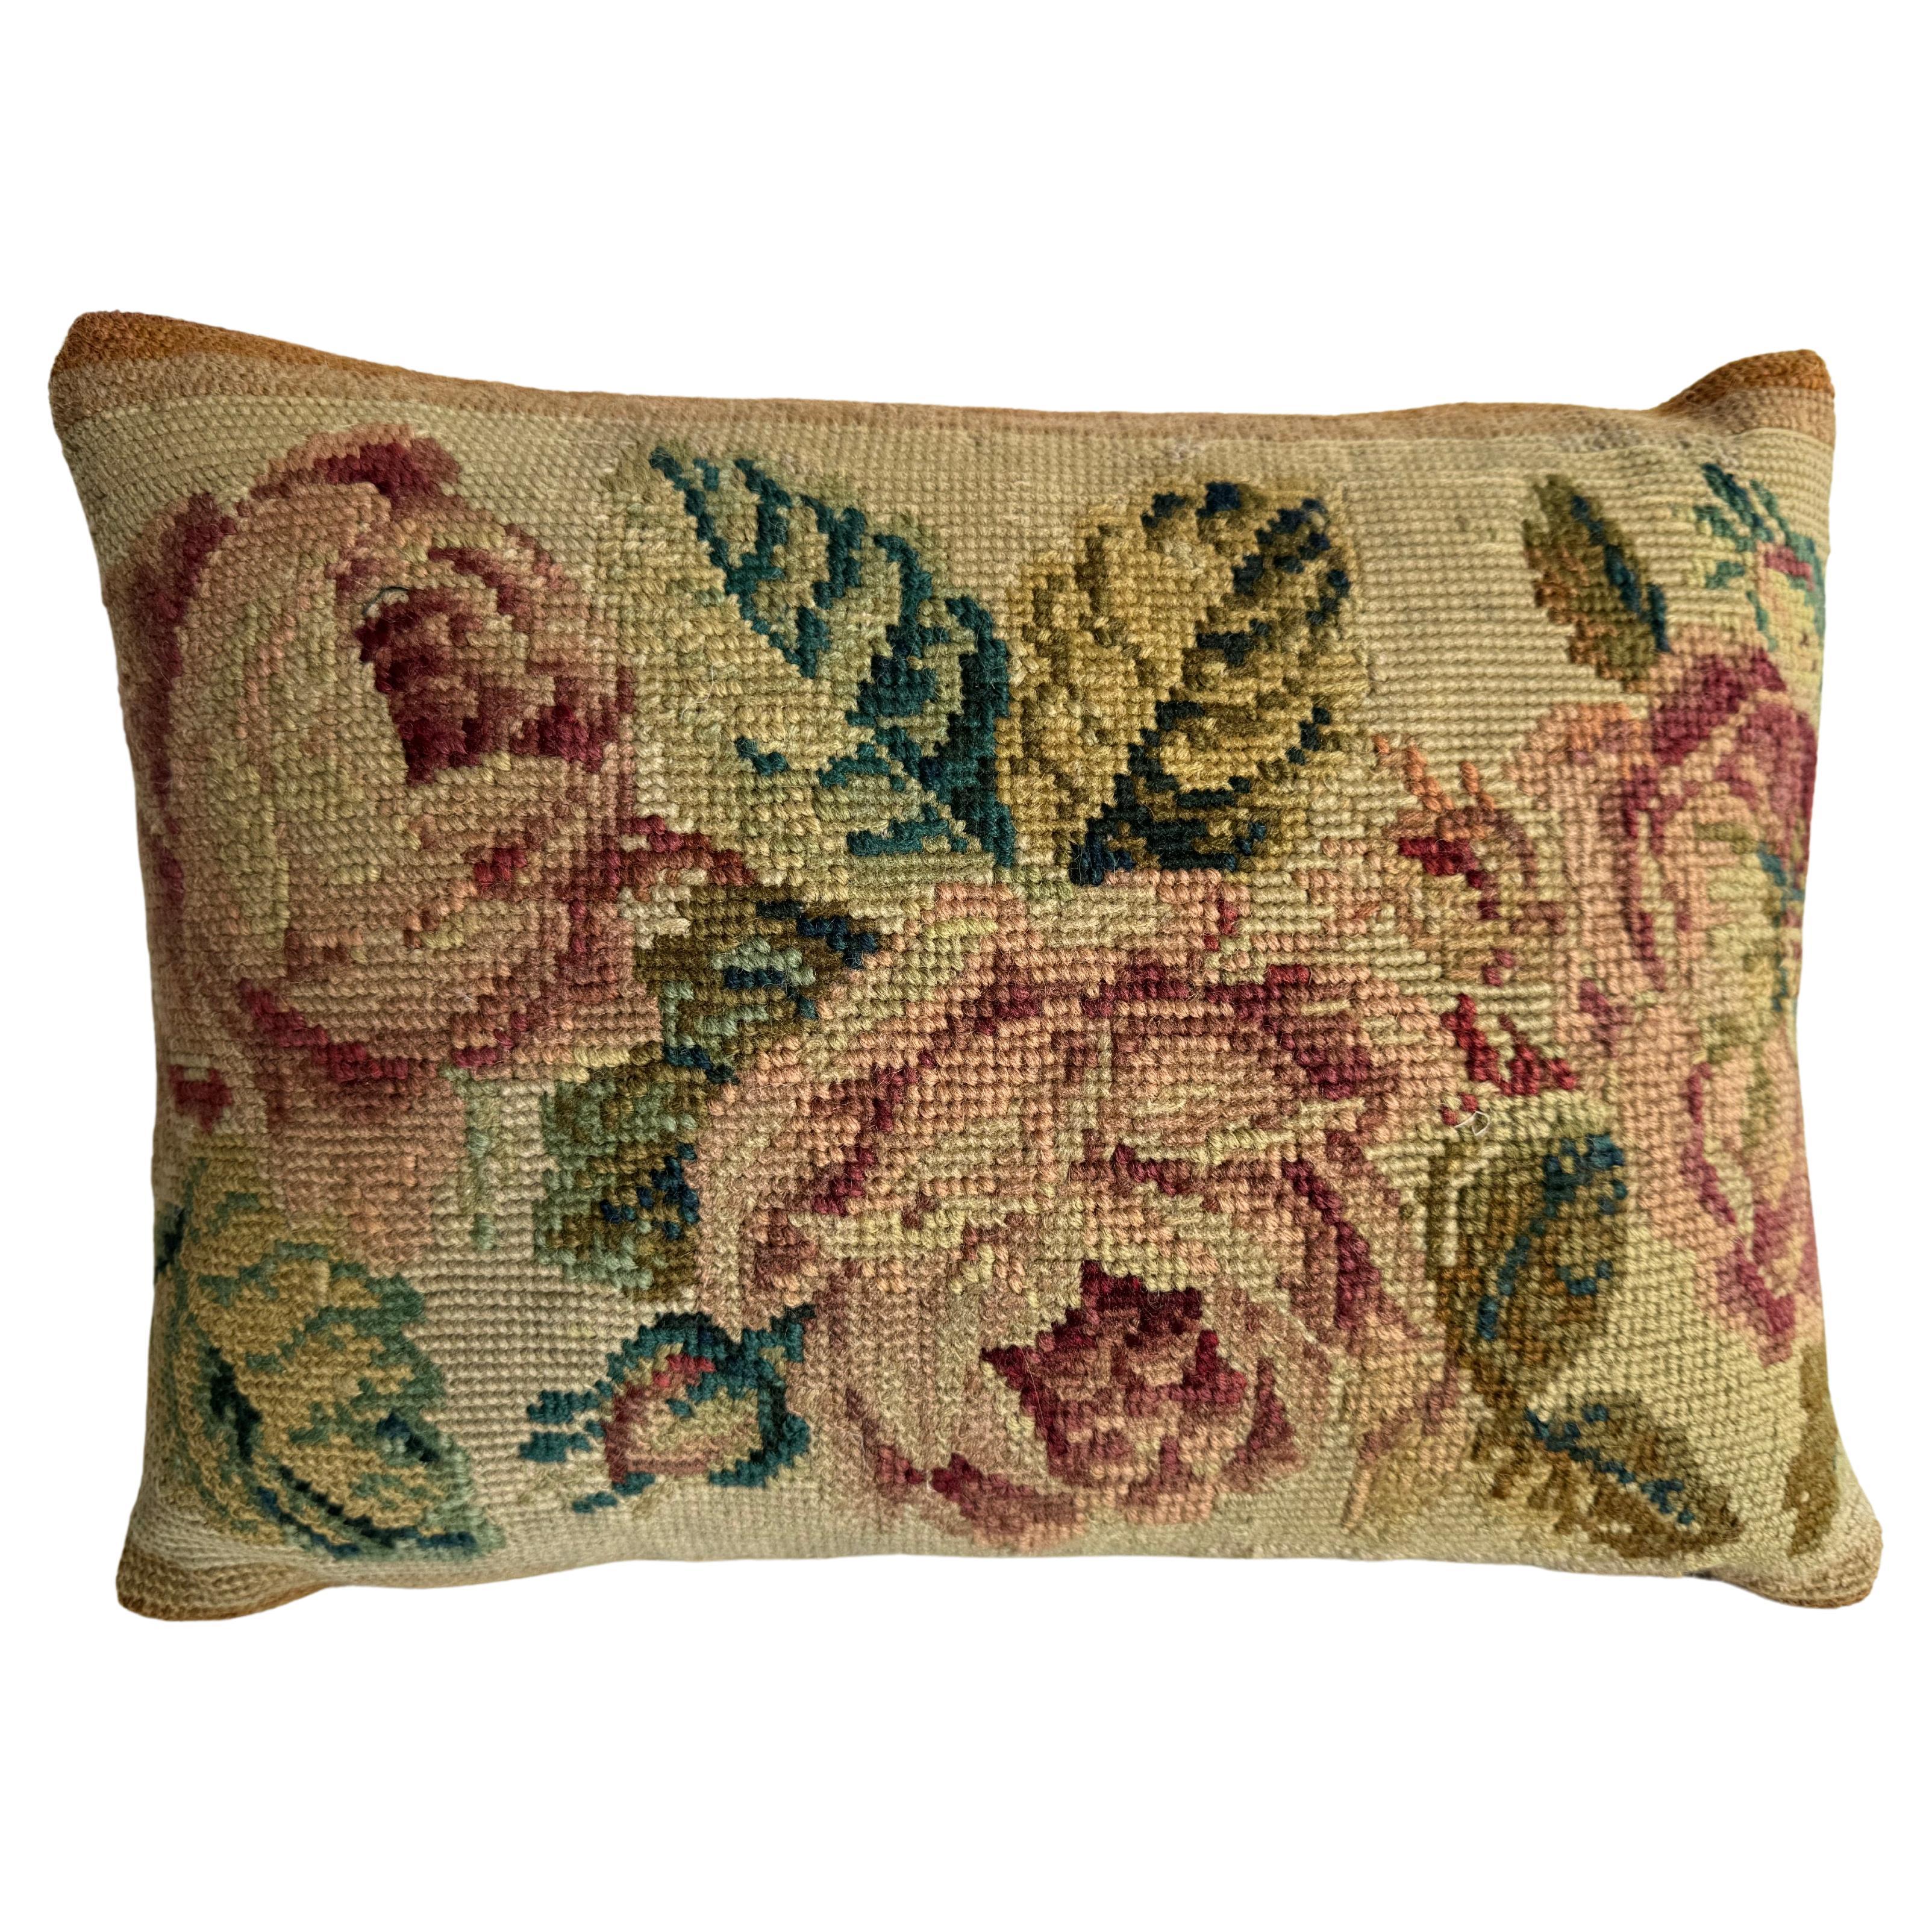 1850 English Needlework 14" x 10" Pillow For Sale